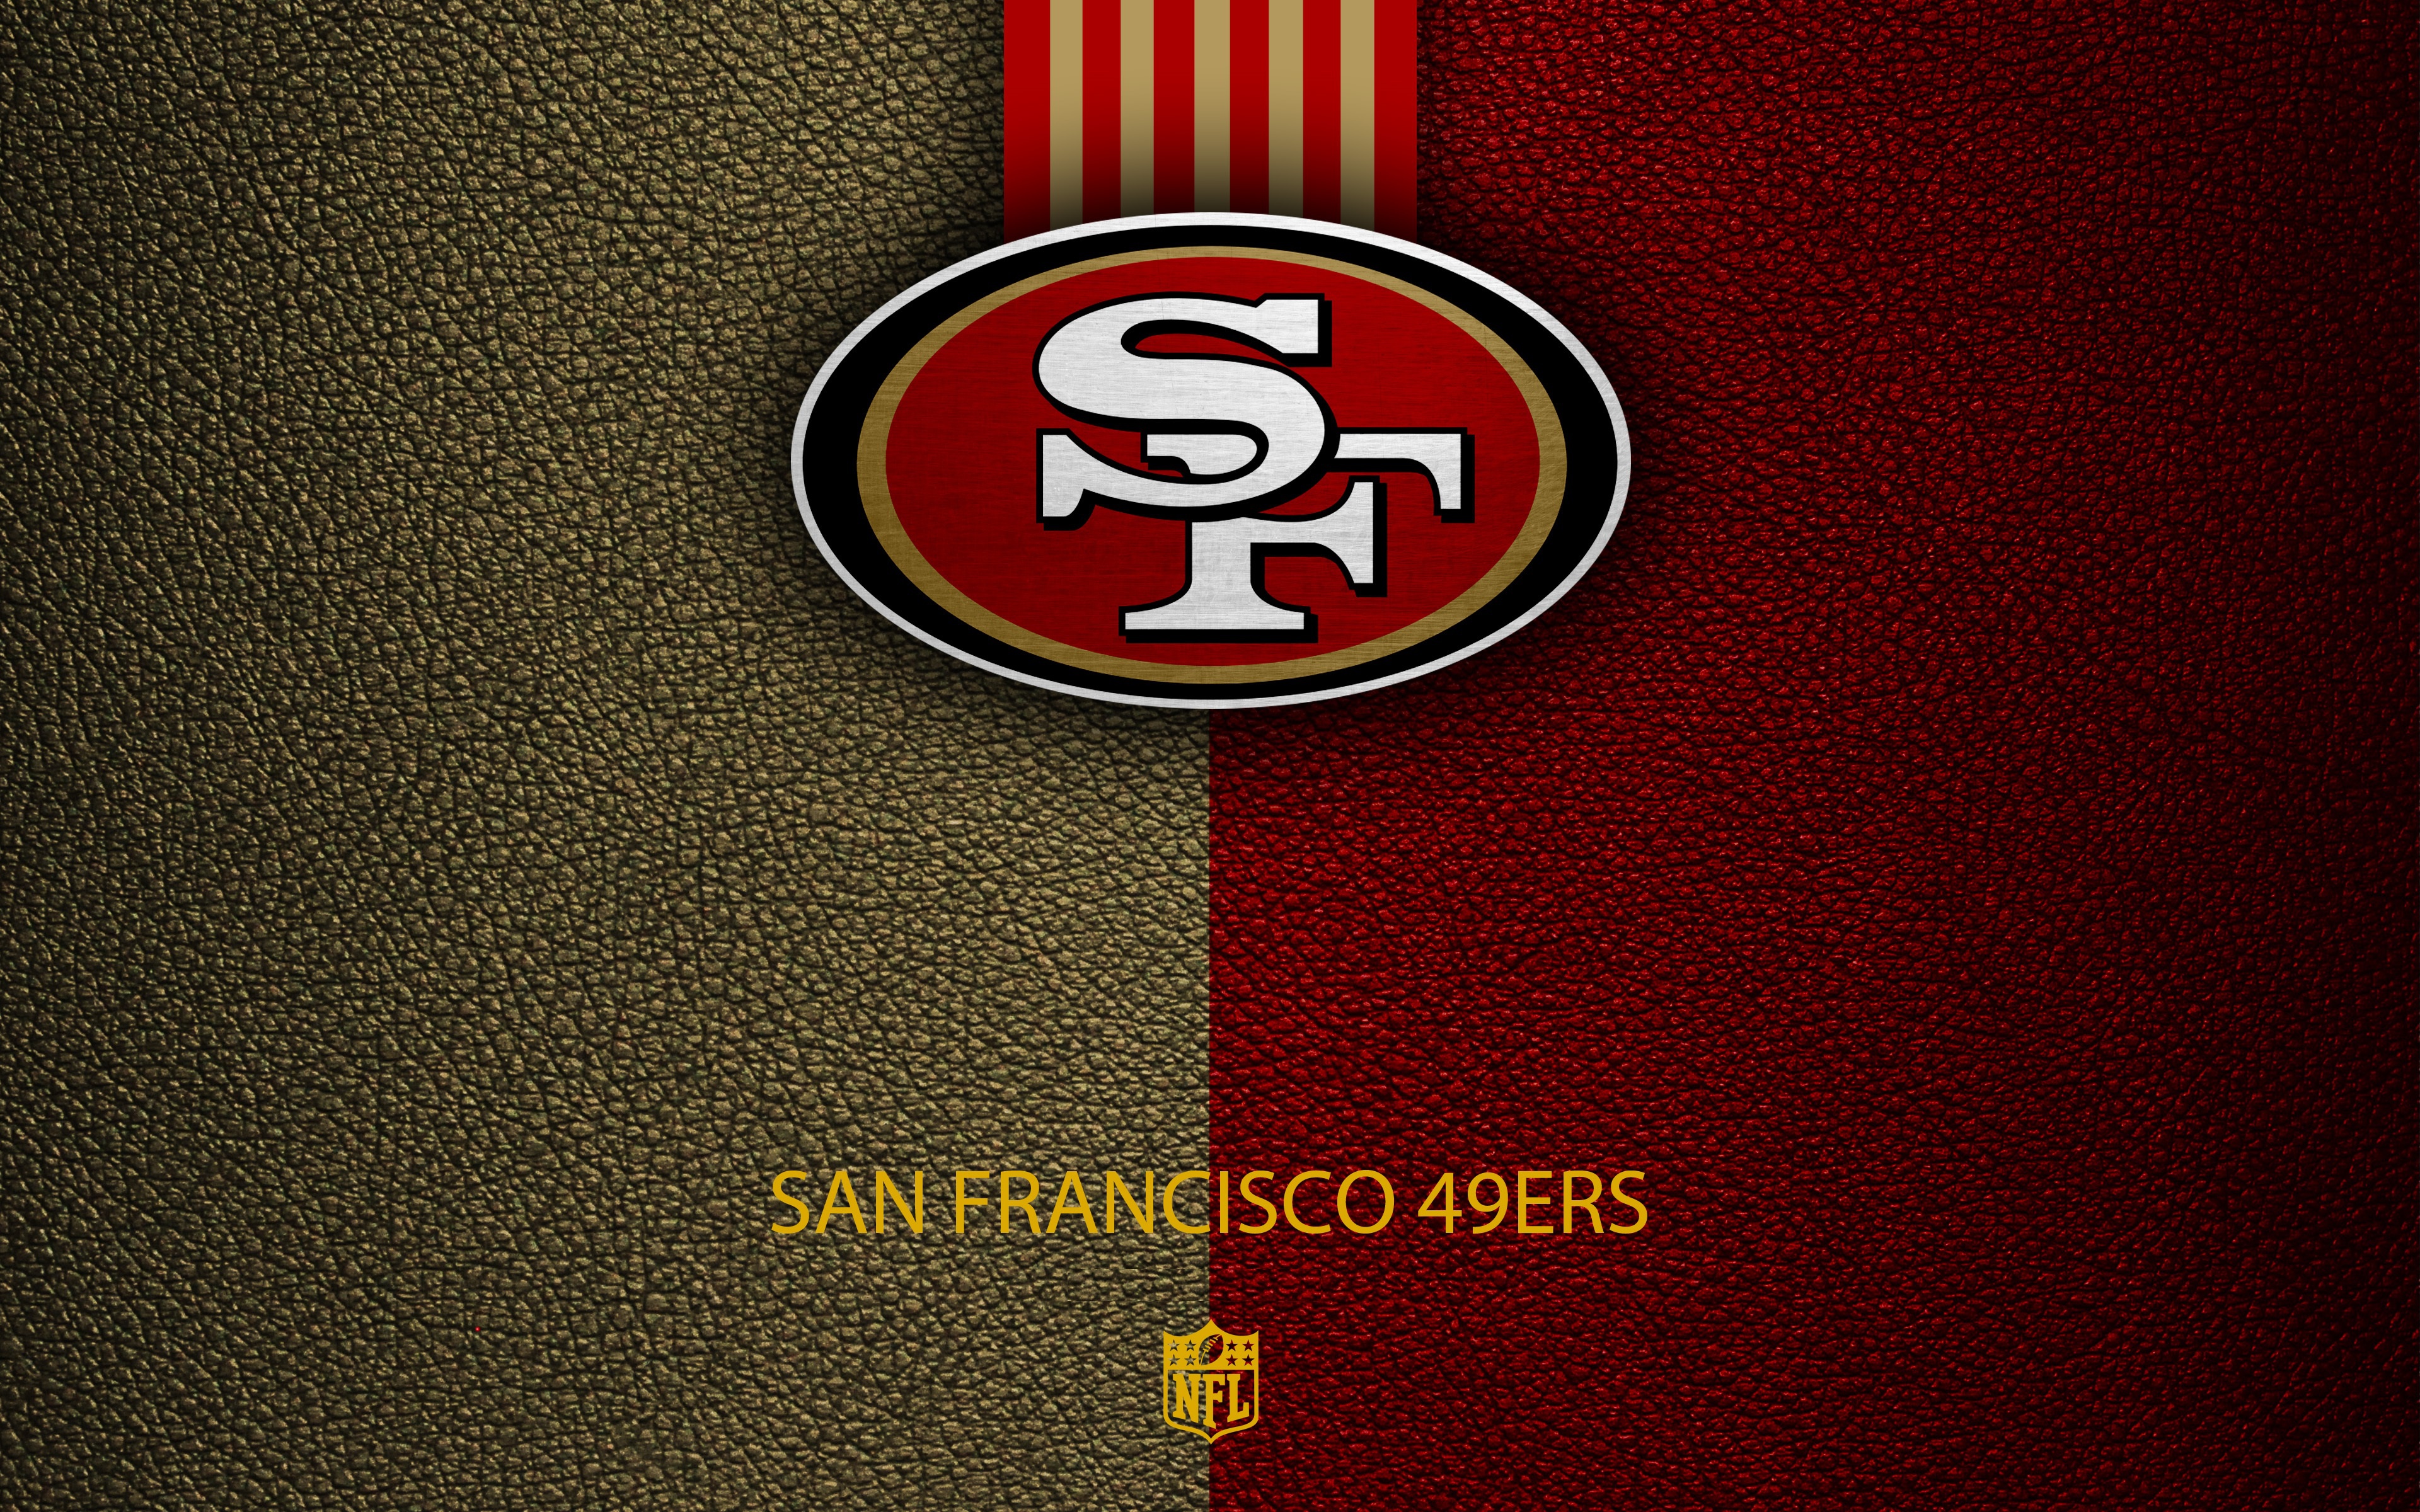 Wallpaper wallpaper, sport, logo, NFL, San Francisco 49ers for mobile and  desktop, section спорт, resolution 3840x2400 - download